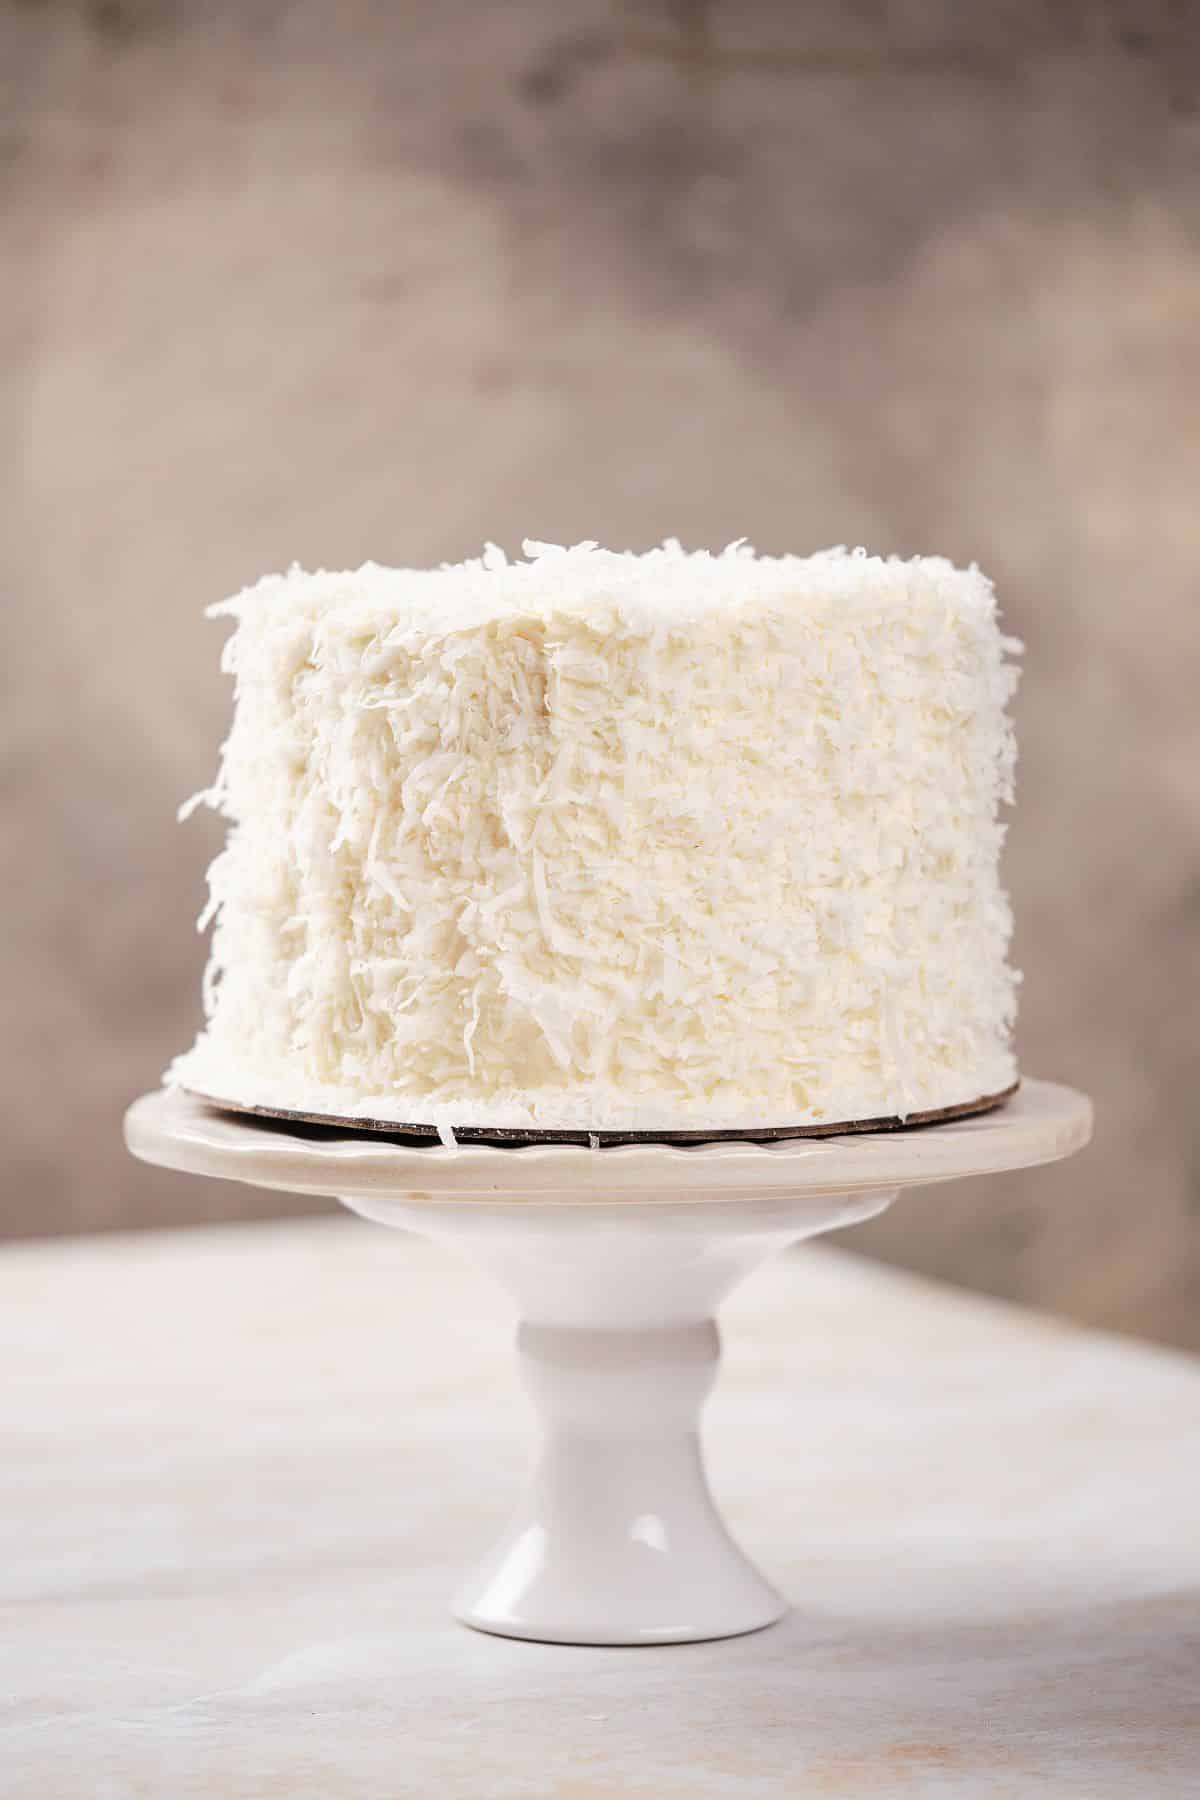 Coconut cream layer cake on a cake pedestal.